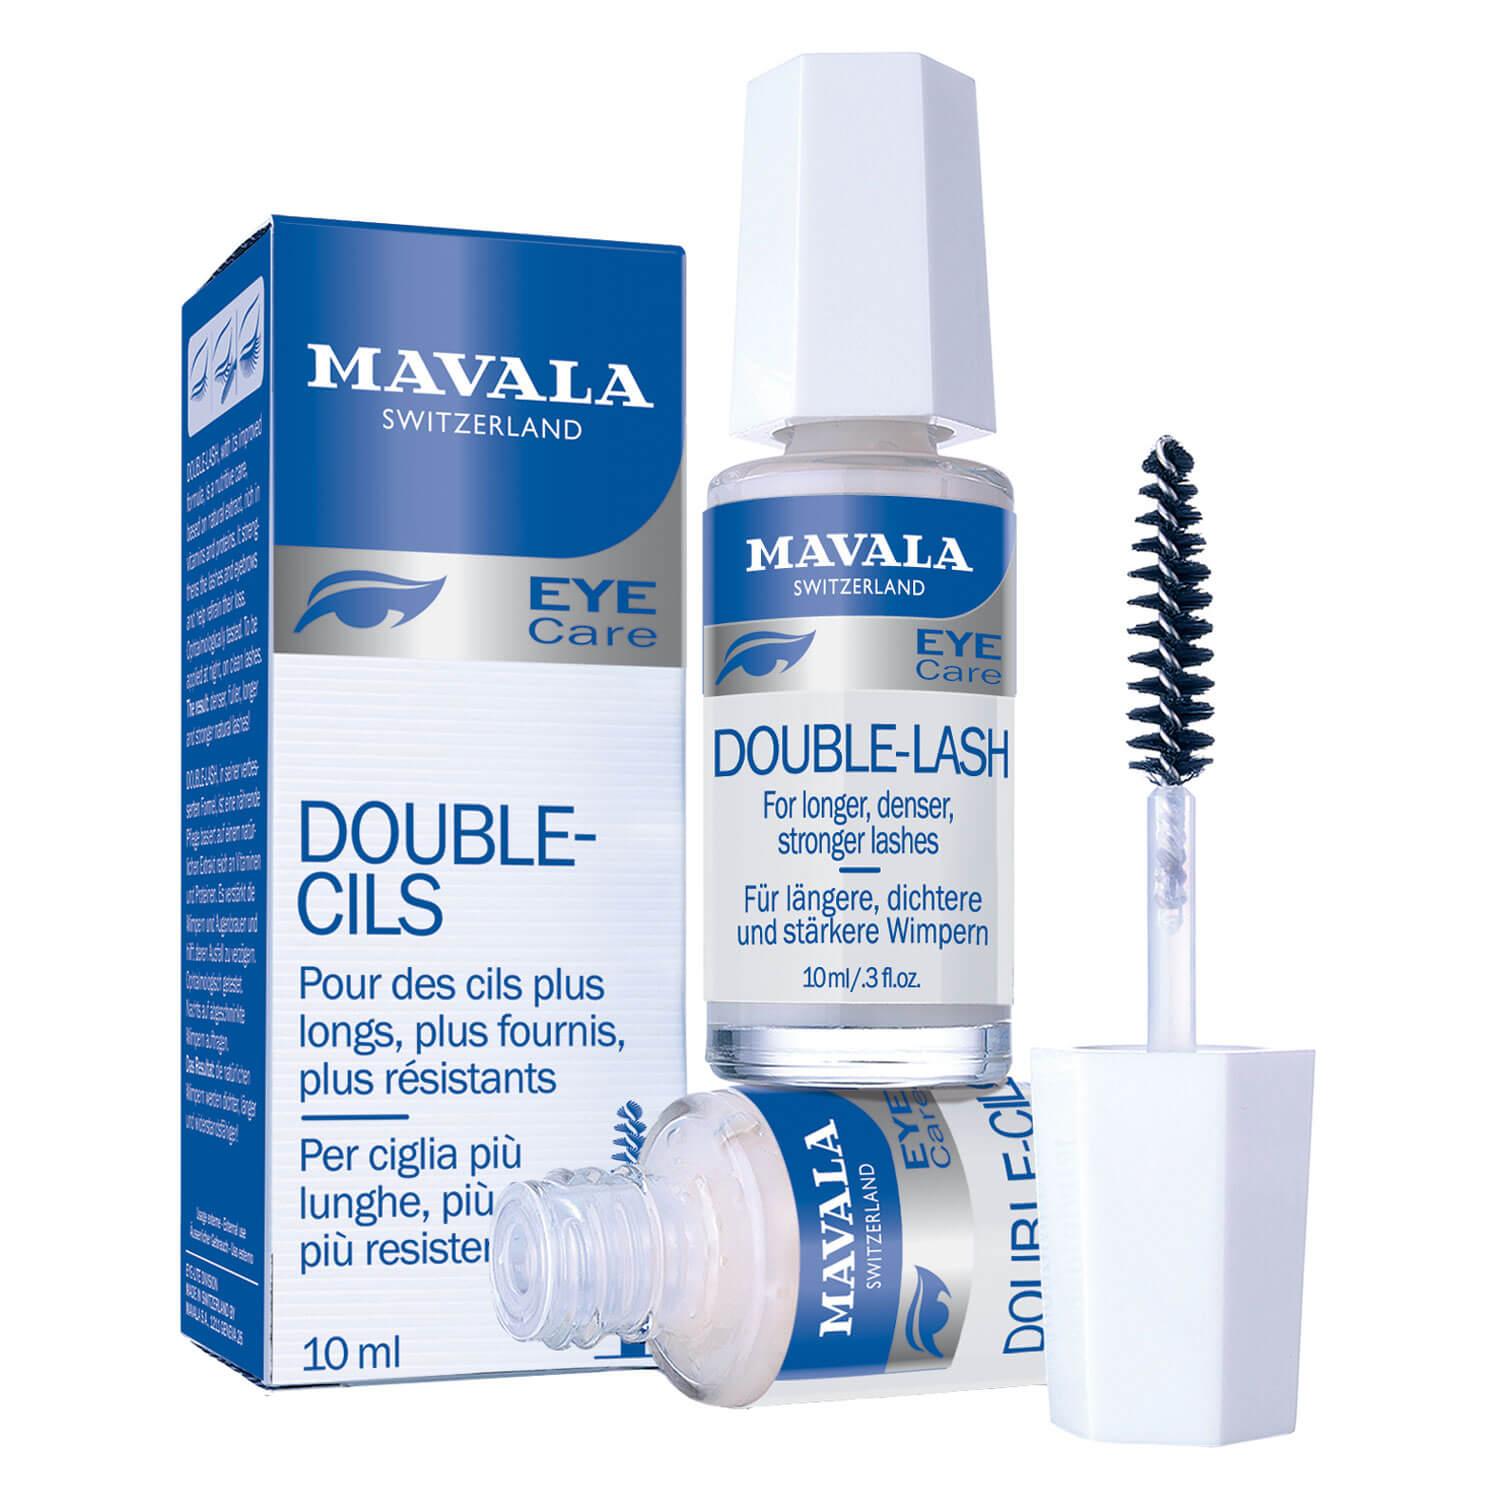 MAVALA Eye Care - Double-Lash